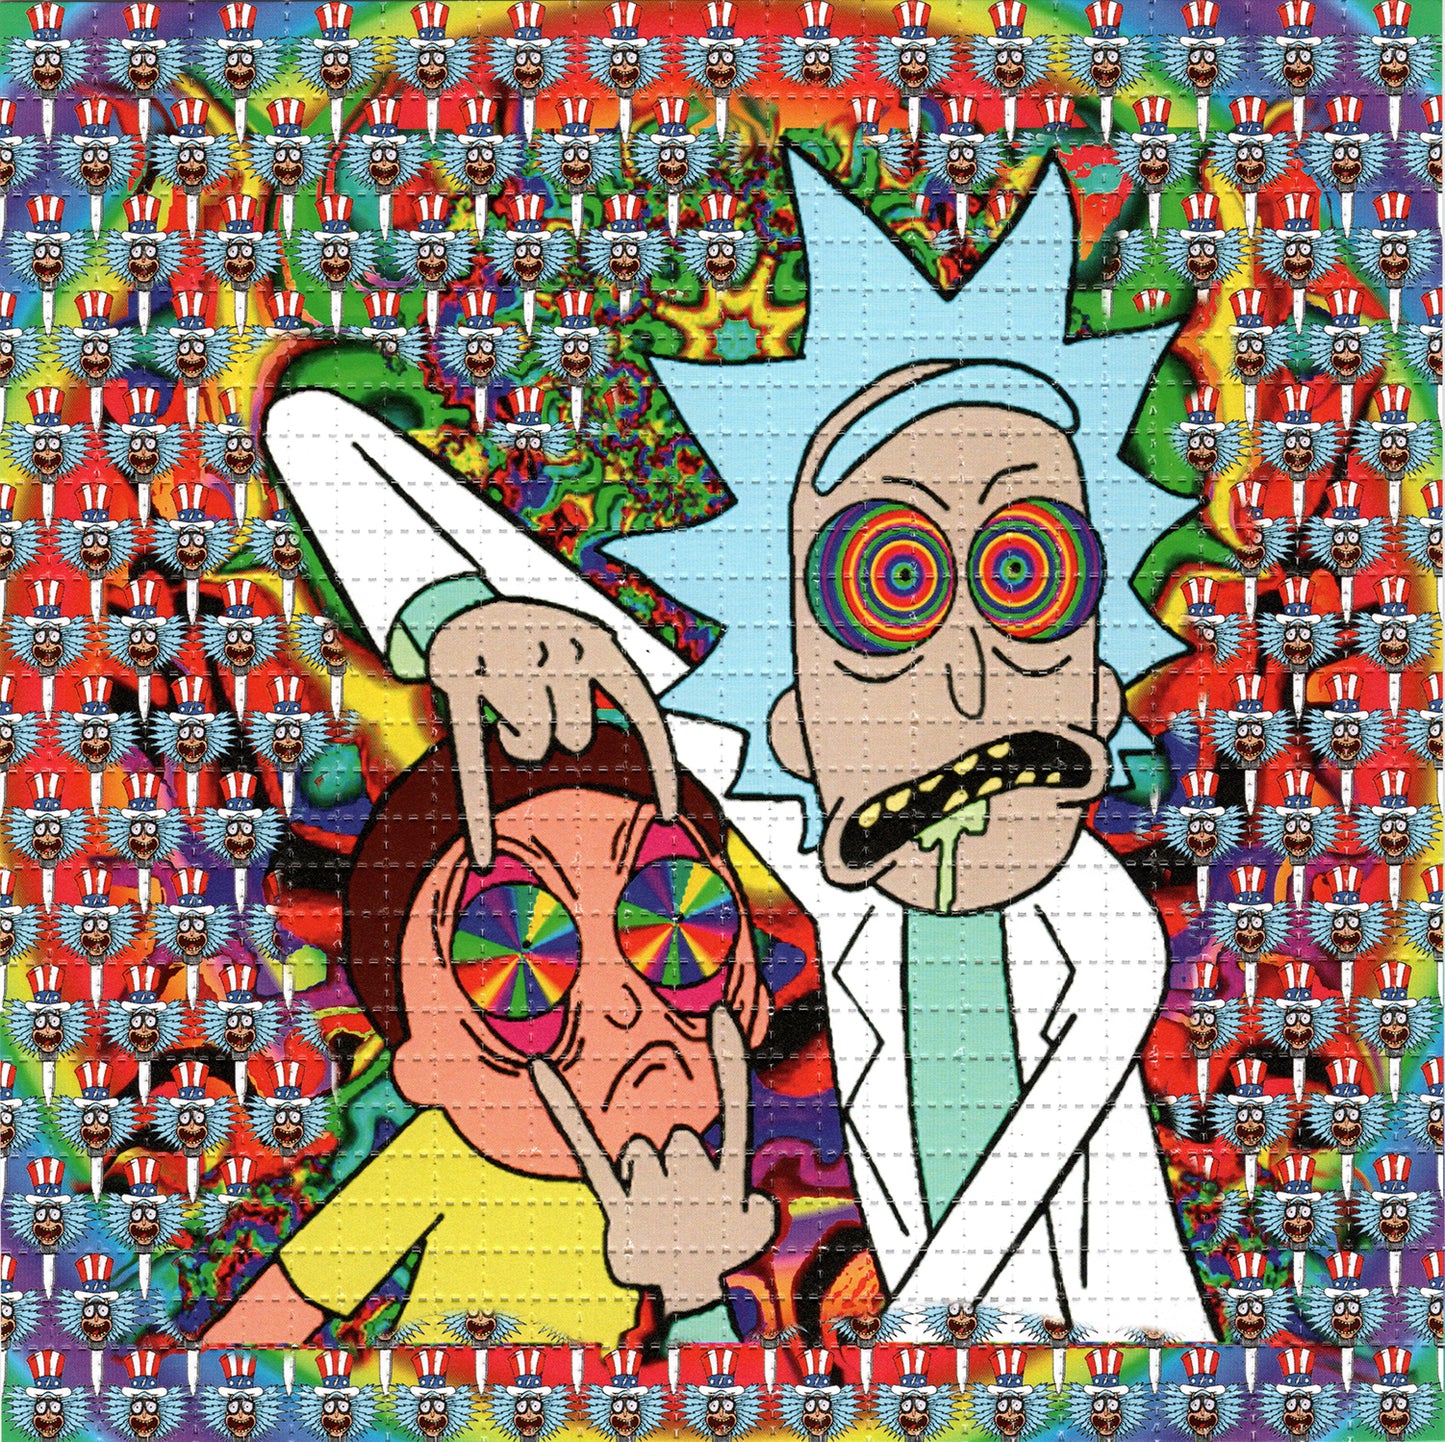 Big R&M LSD blotter art print